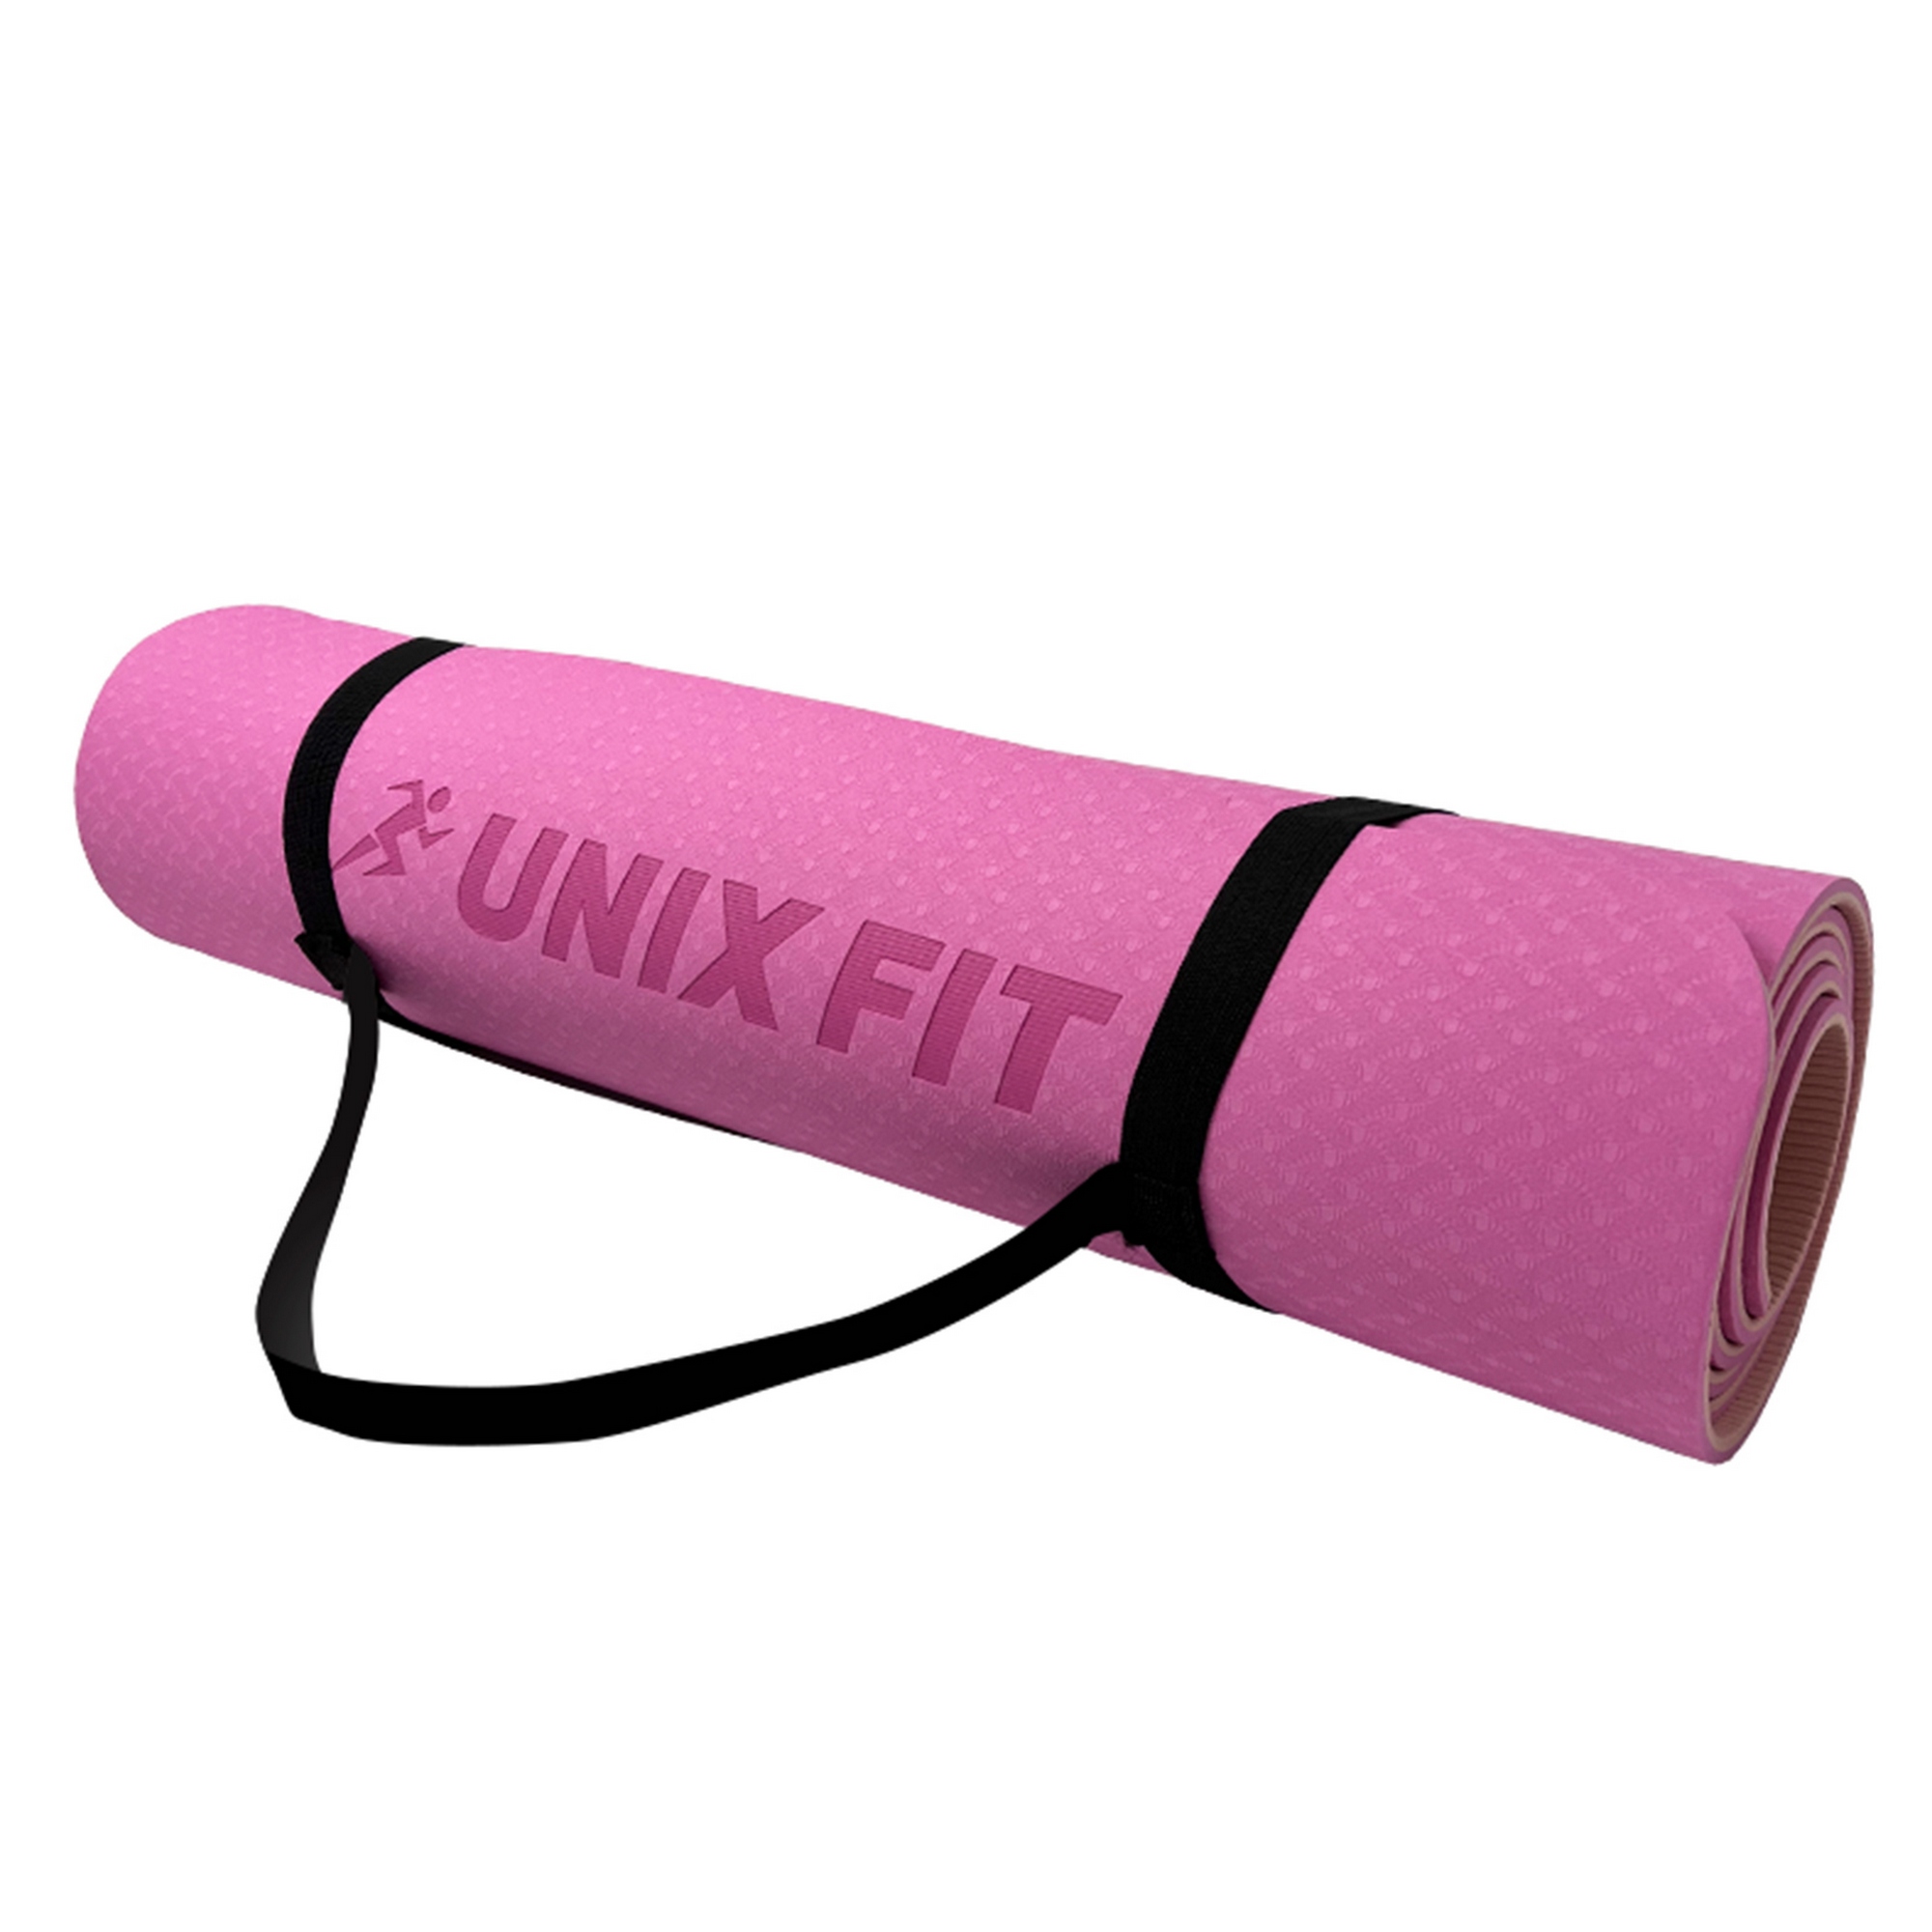 Коврик для йоги и фитнеса двусторонний, 180х61х0,6см UnixFit YMU6MMPK двуцветный, розовый 2000_2000